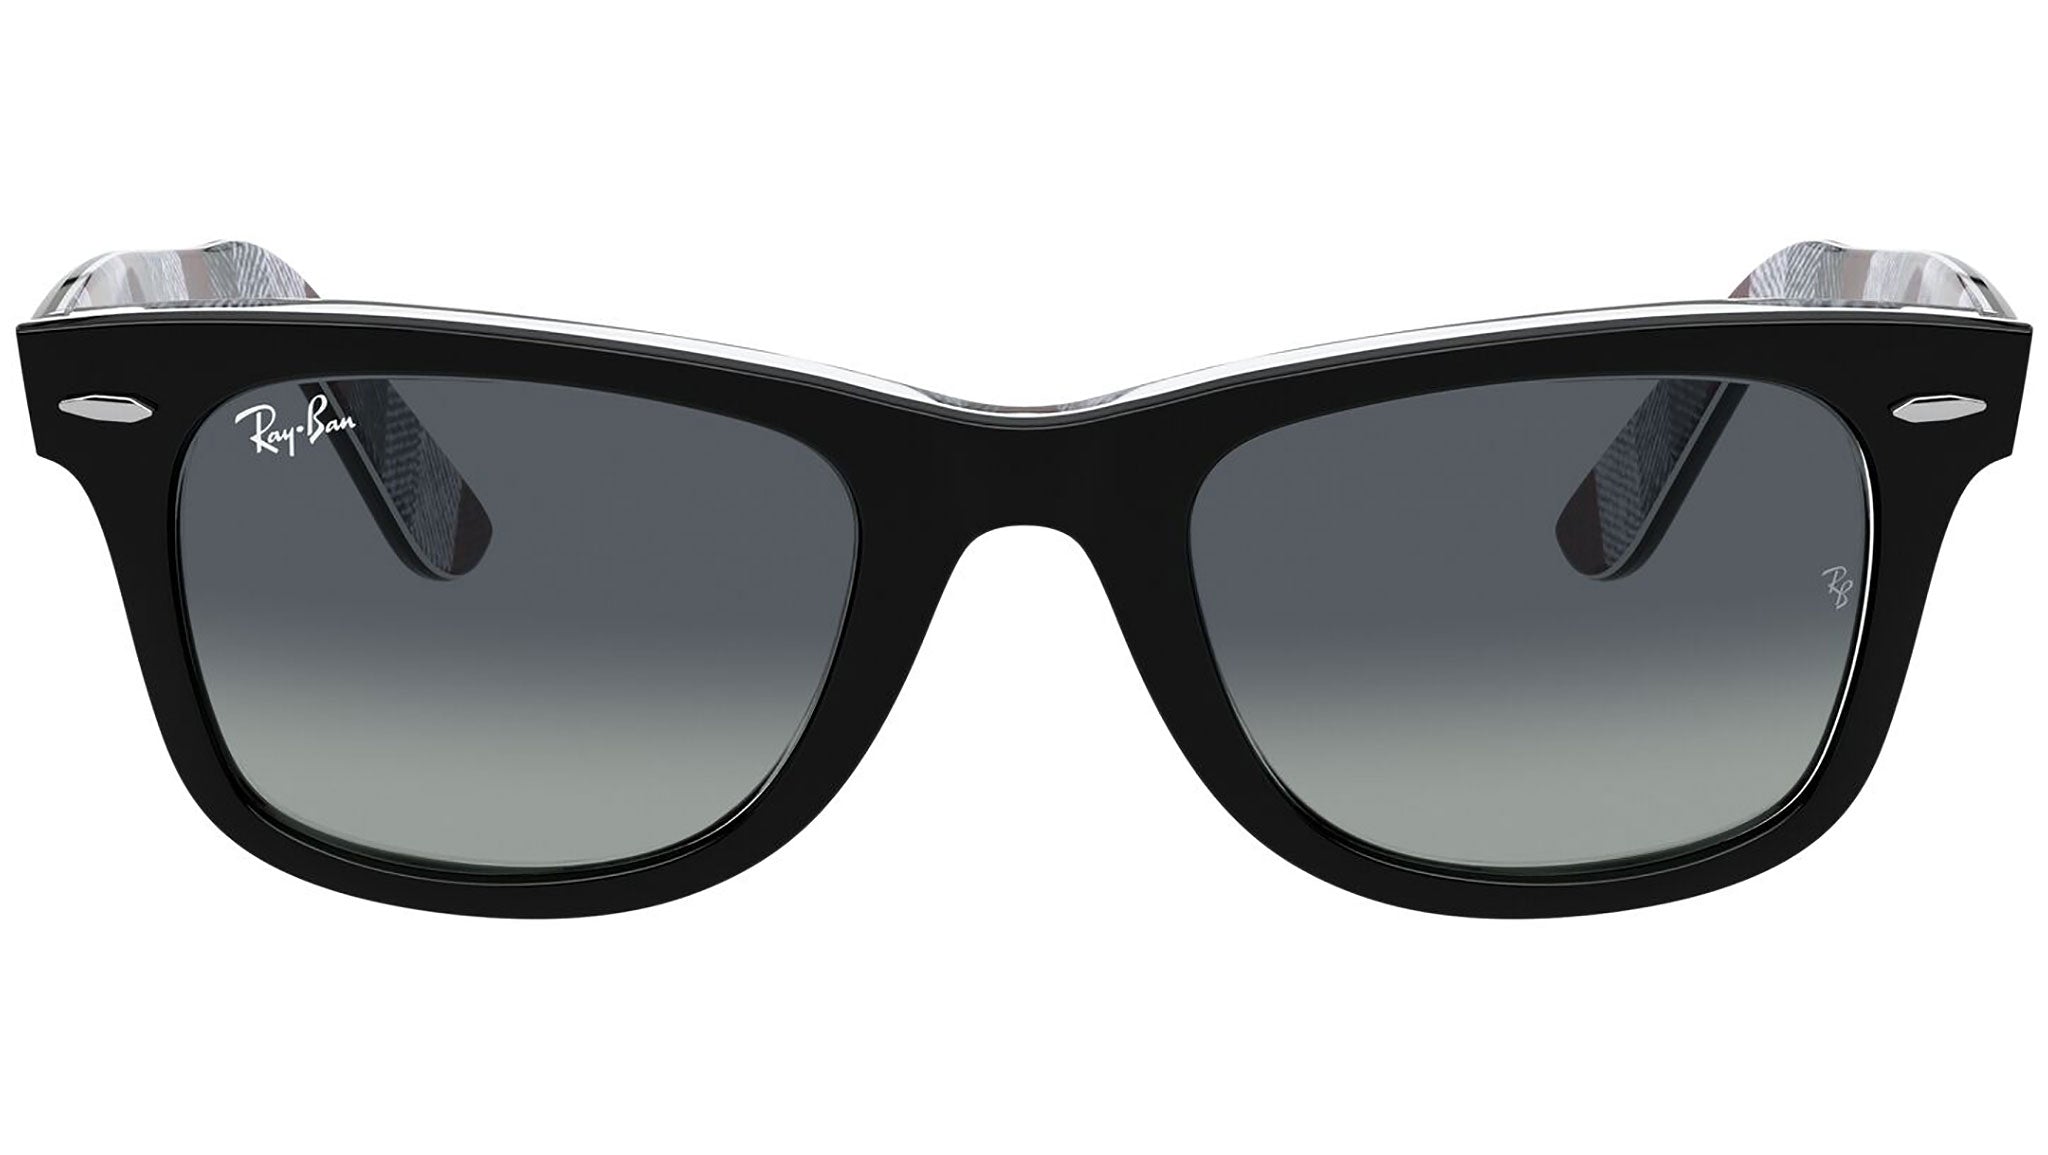 Buy Ray-Ban Mega Wayfarer Sunglasses Online.